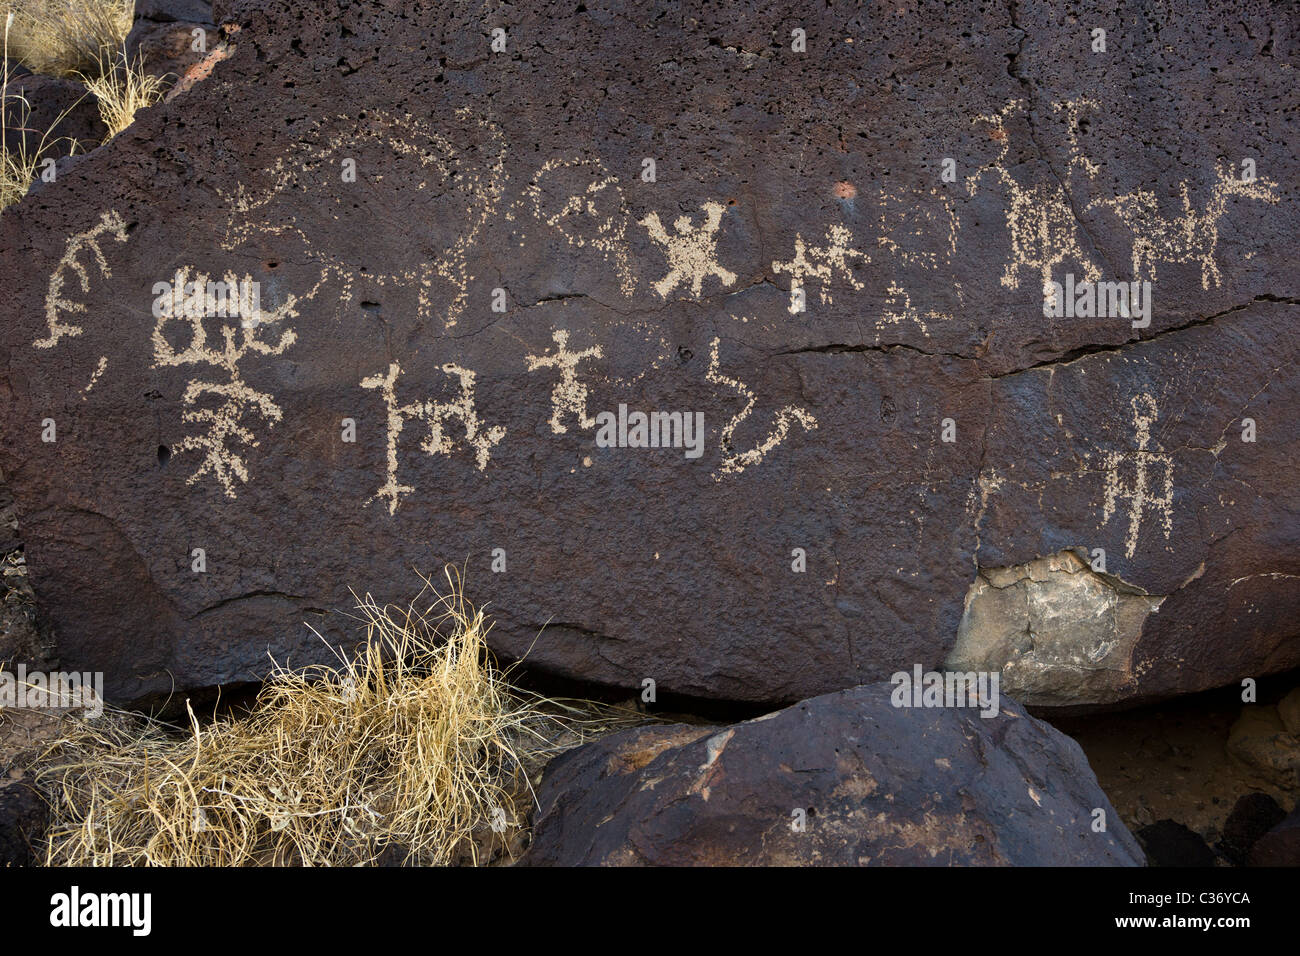 Native American petroglyphs in Rinconada Canyon at Petroglyph National Monument, Albuquerque, New Mexico, USA. Stock Photo